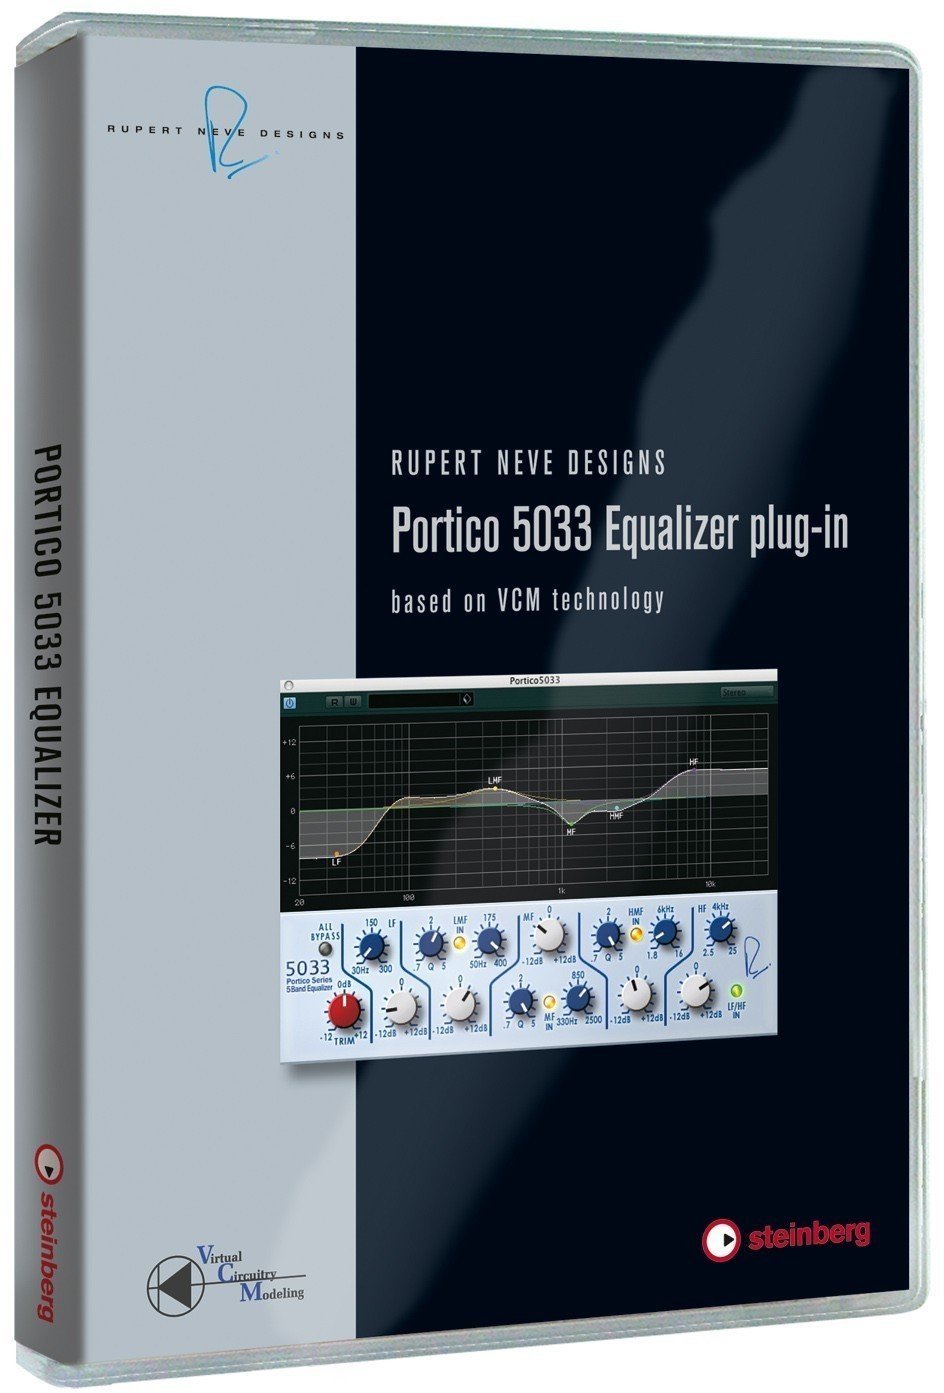 Studijski software VST glasbilo Steinberg RND Portico 5033 EQ